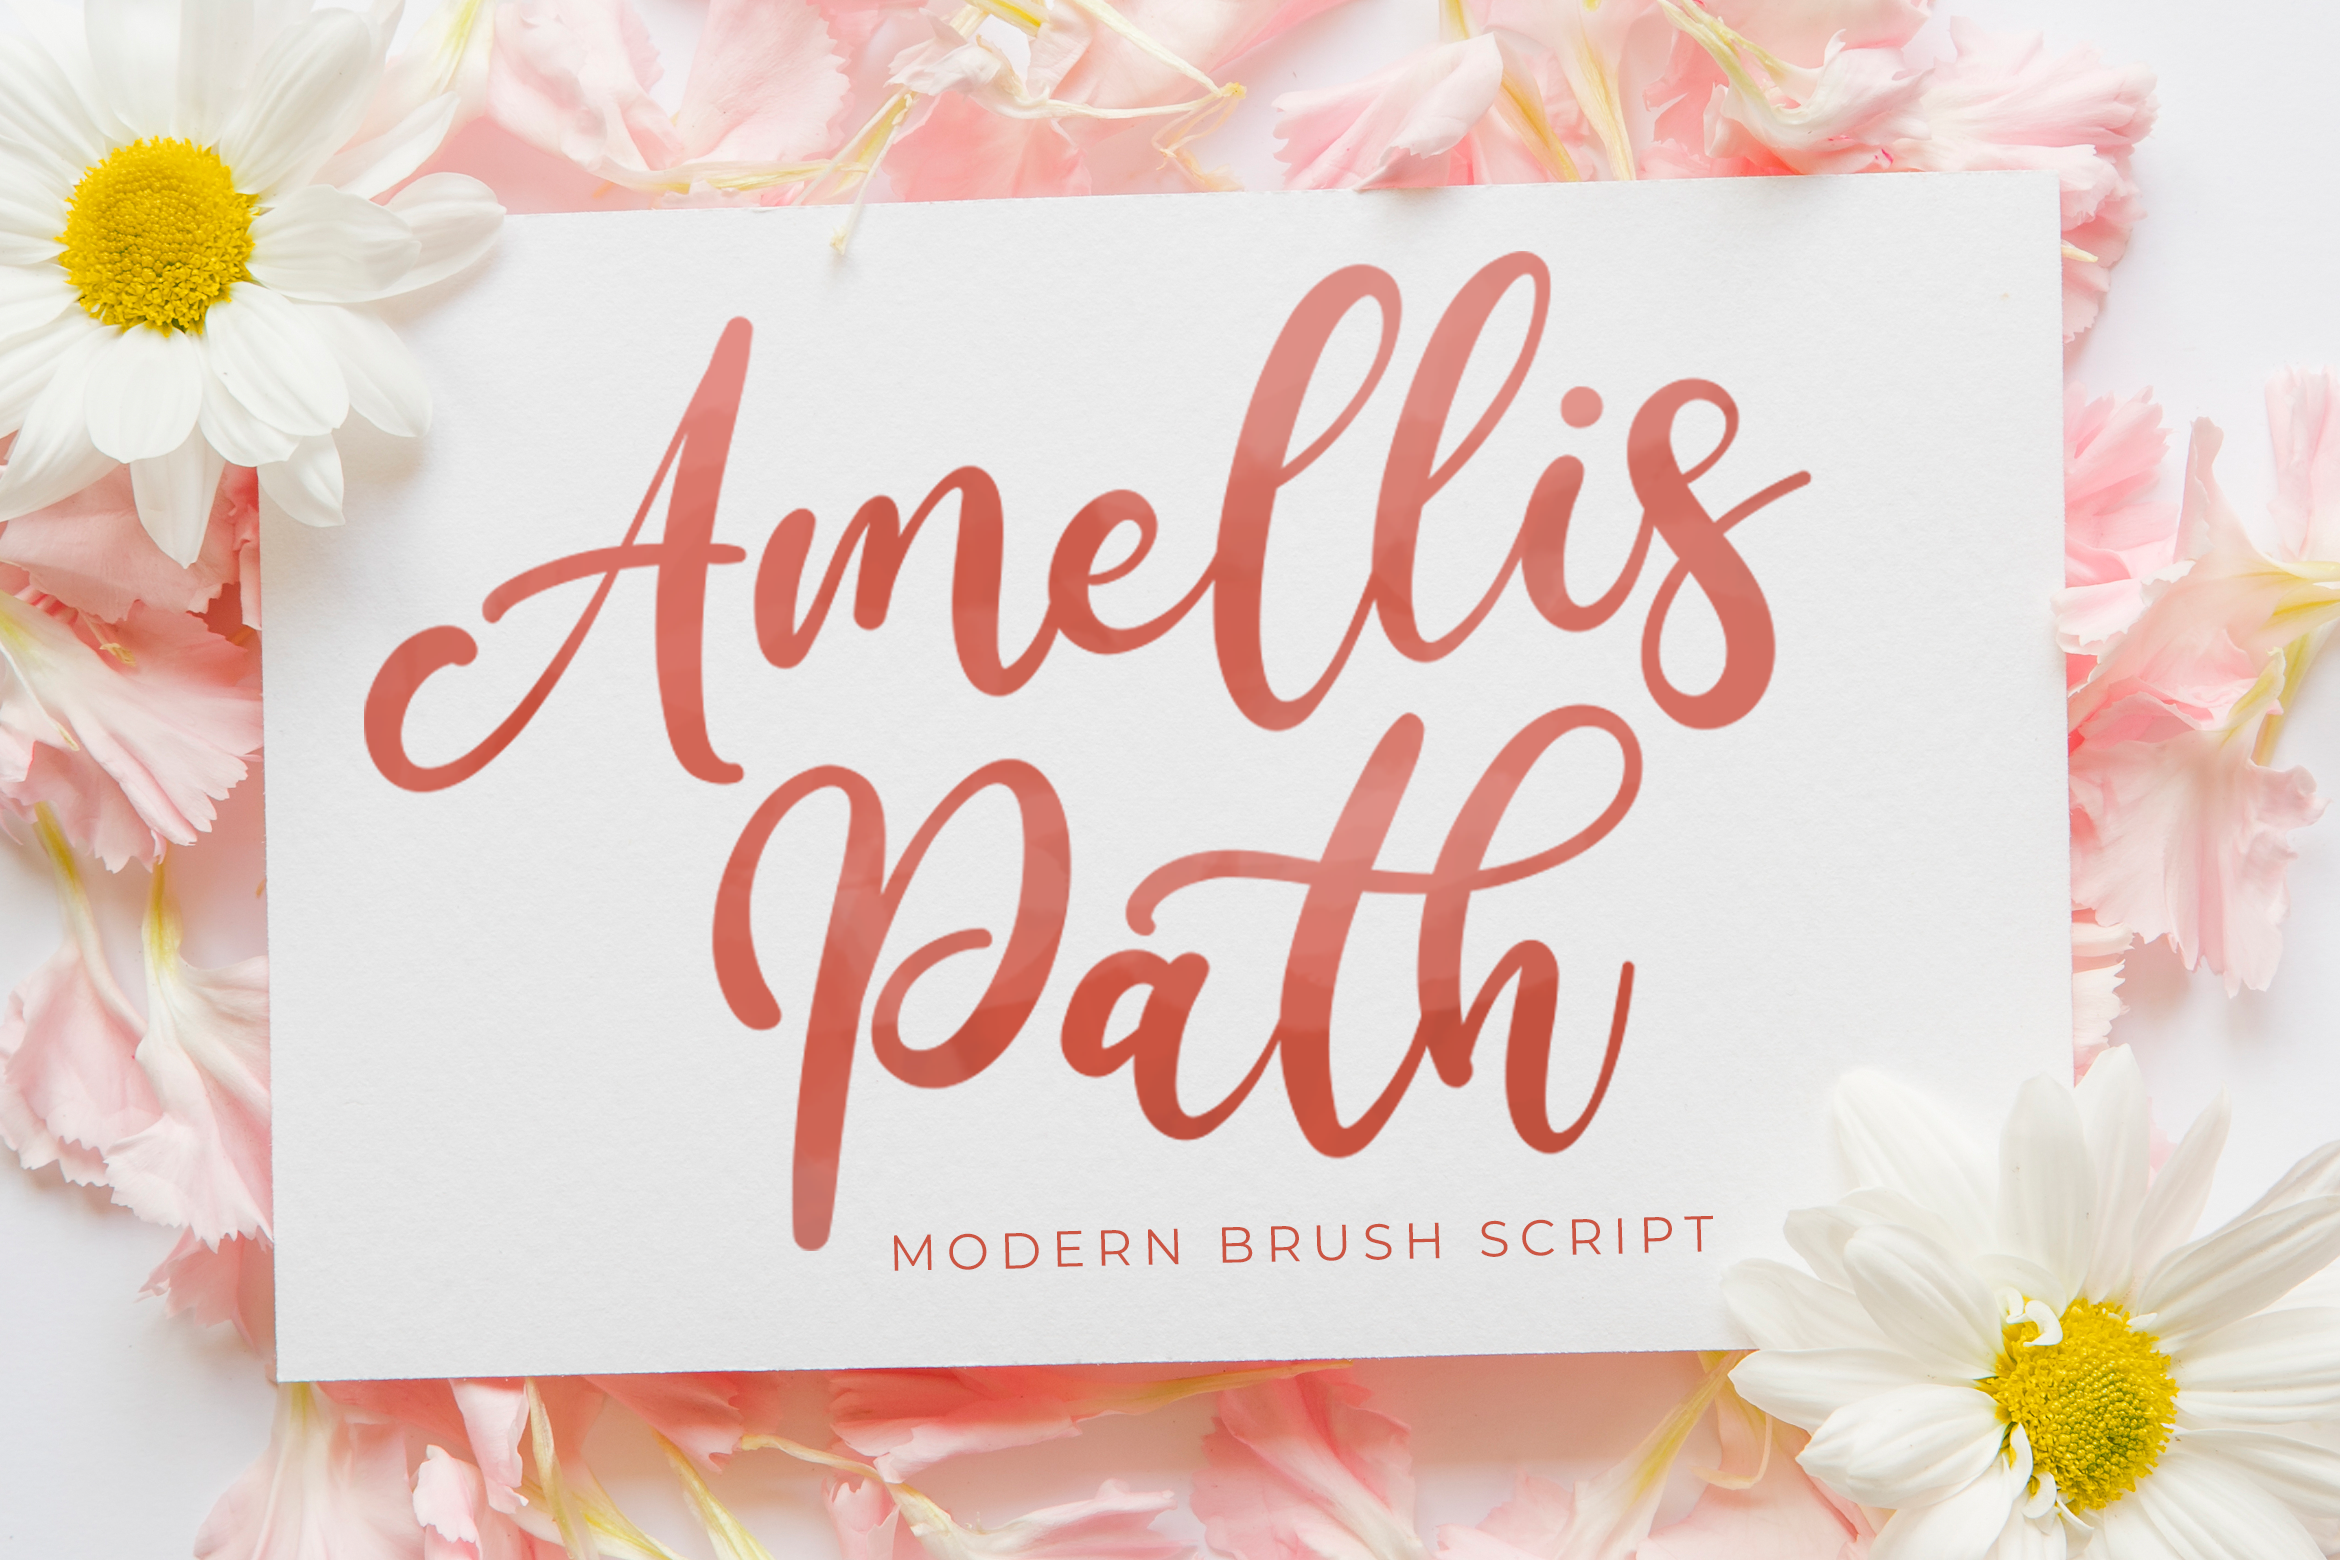 Amellis Path Brush Script Font By Stringlabs Thehungryjpeg Com